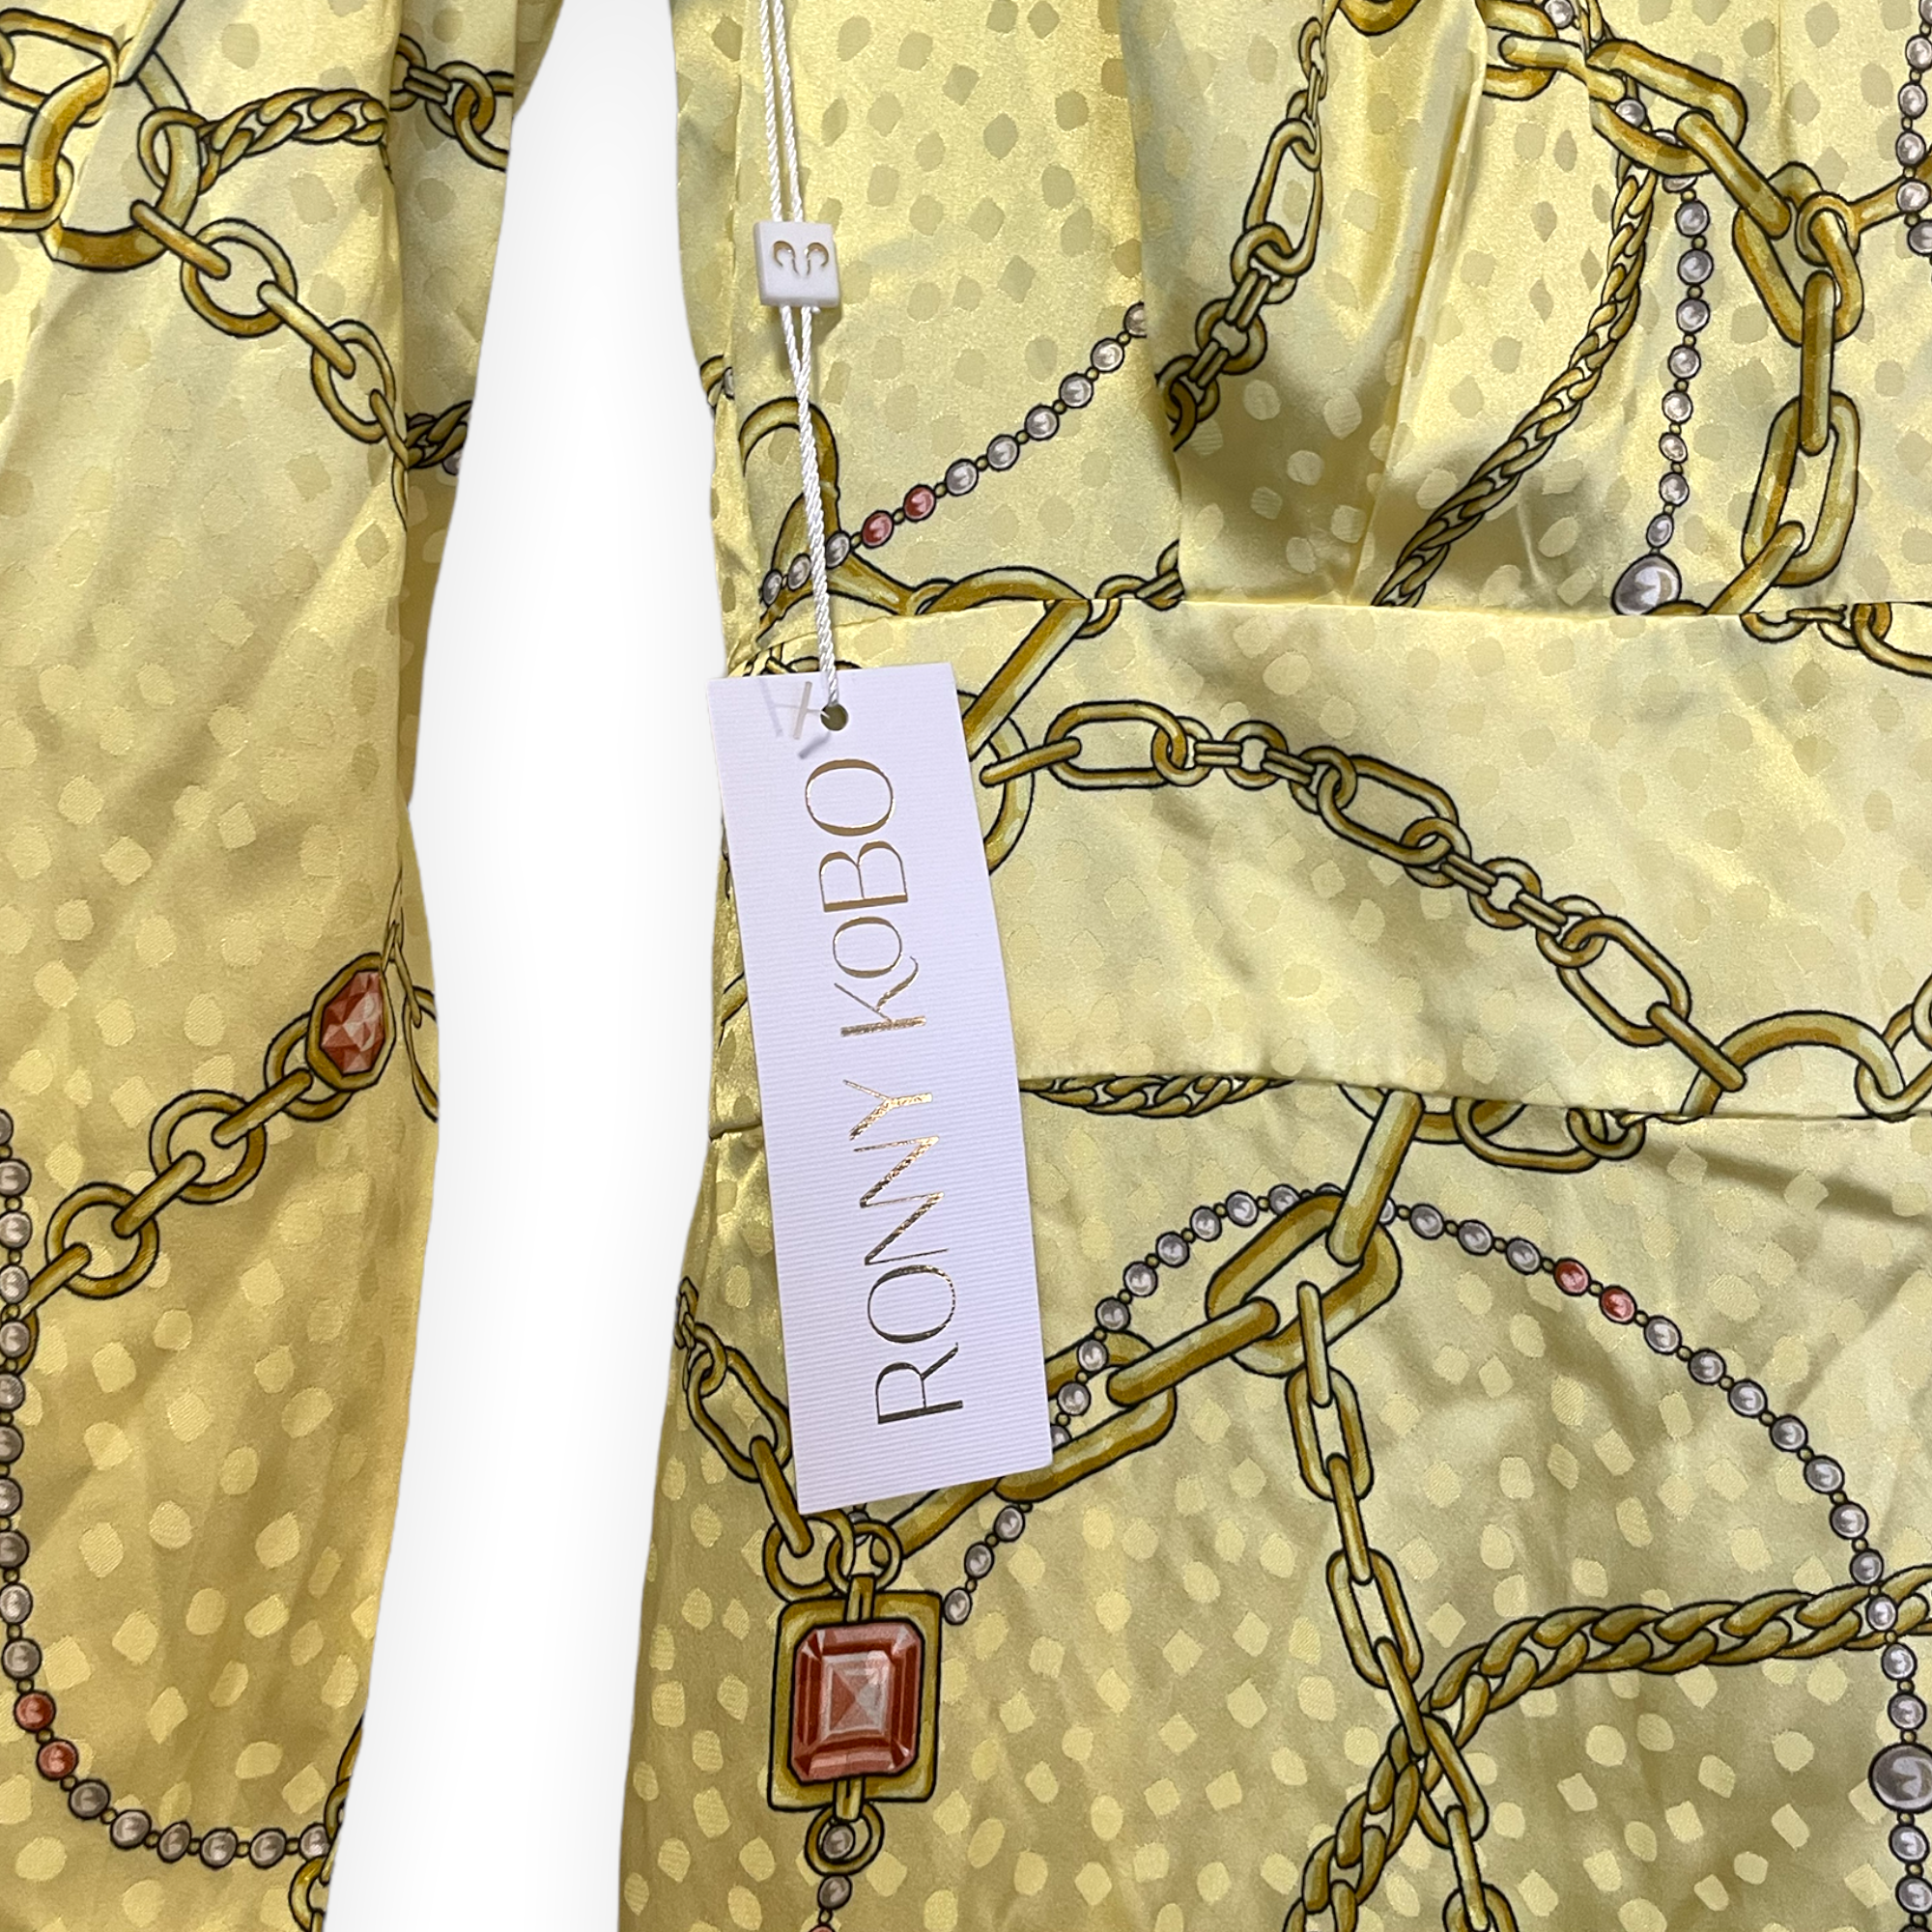 Ronny Kobo Collection Kaira Silk Midi Dress Limmul Mock Neck